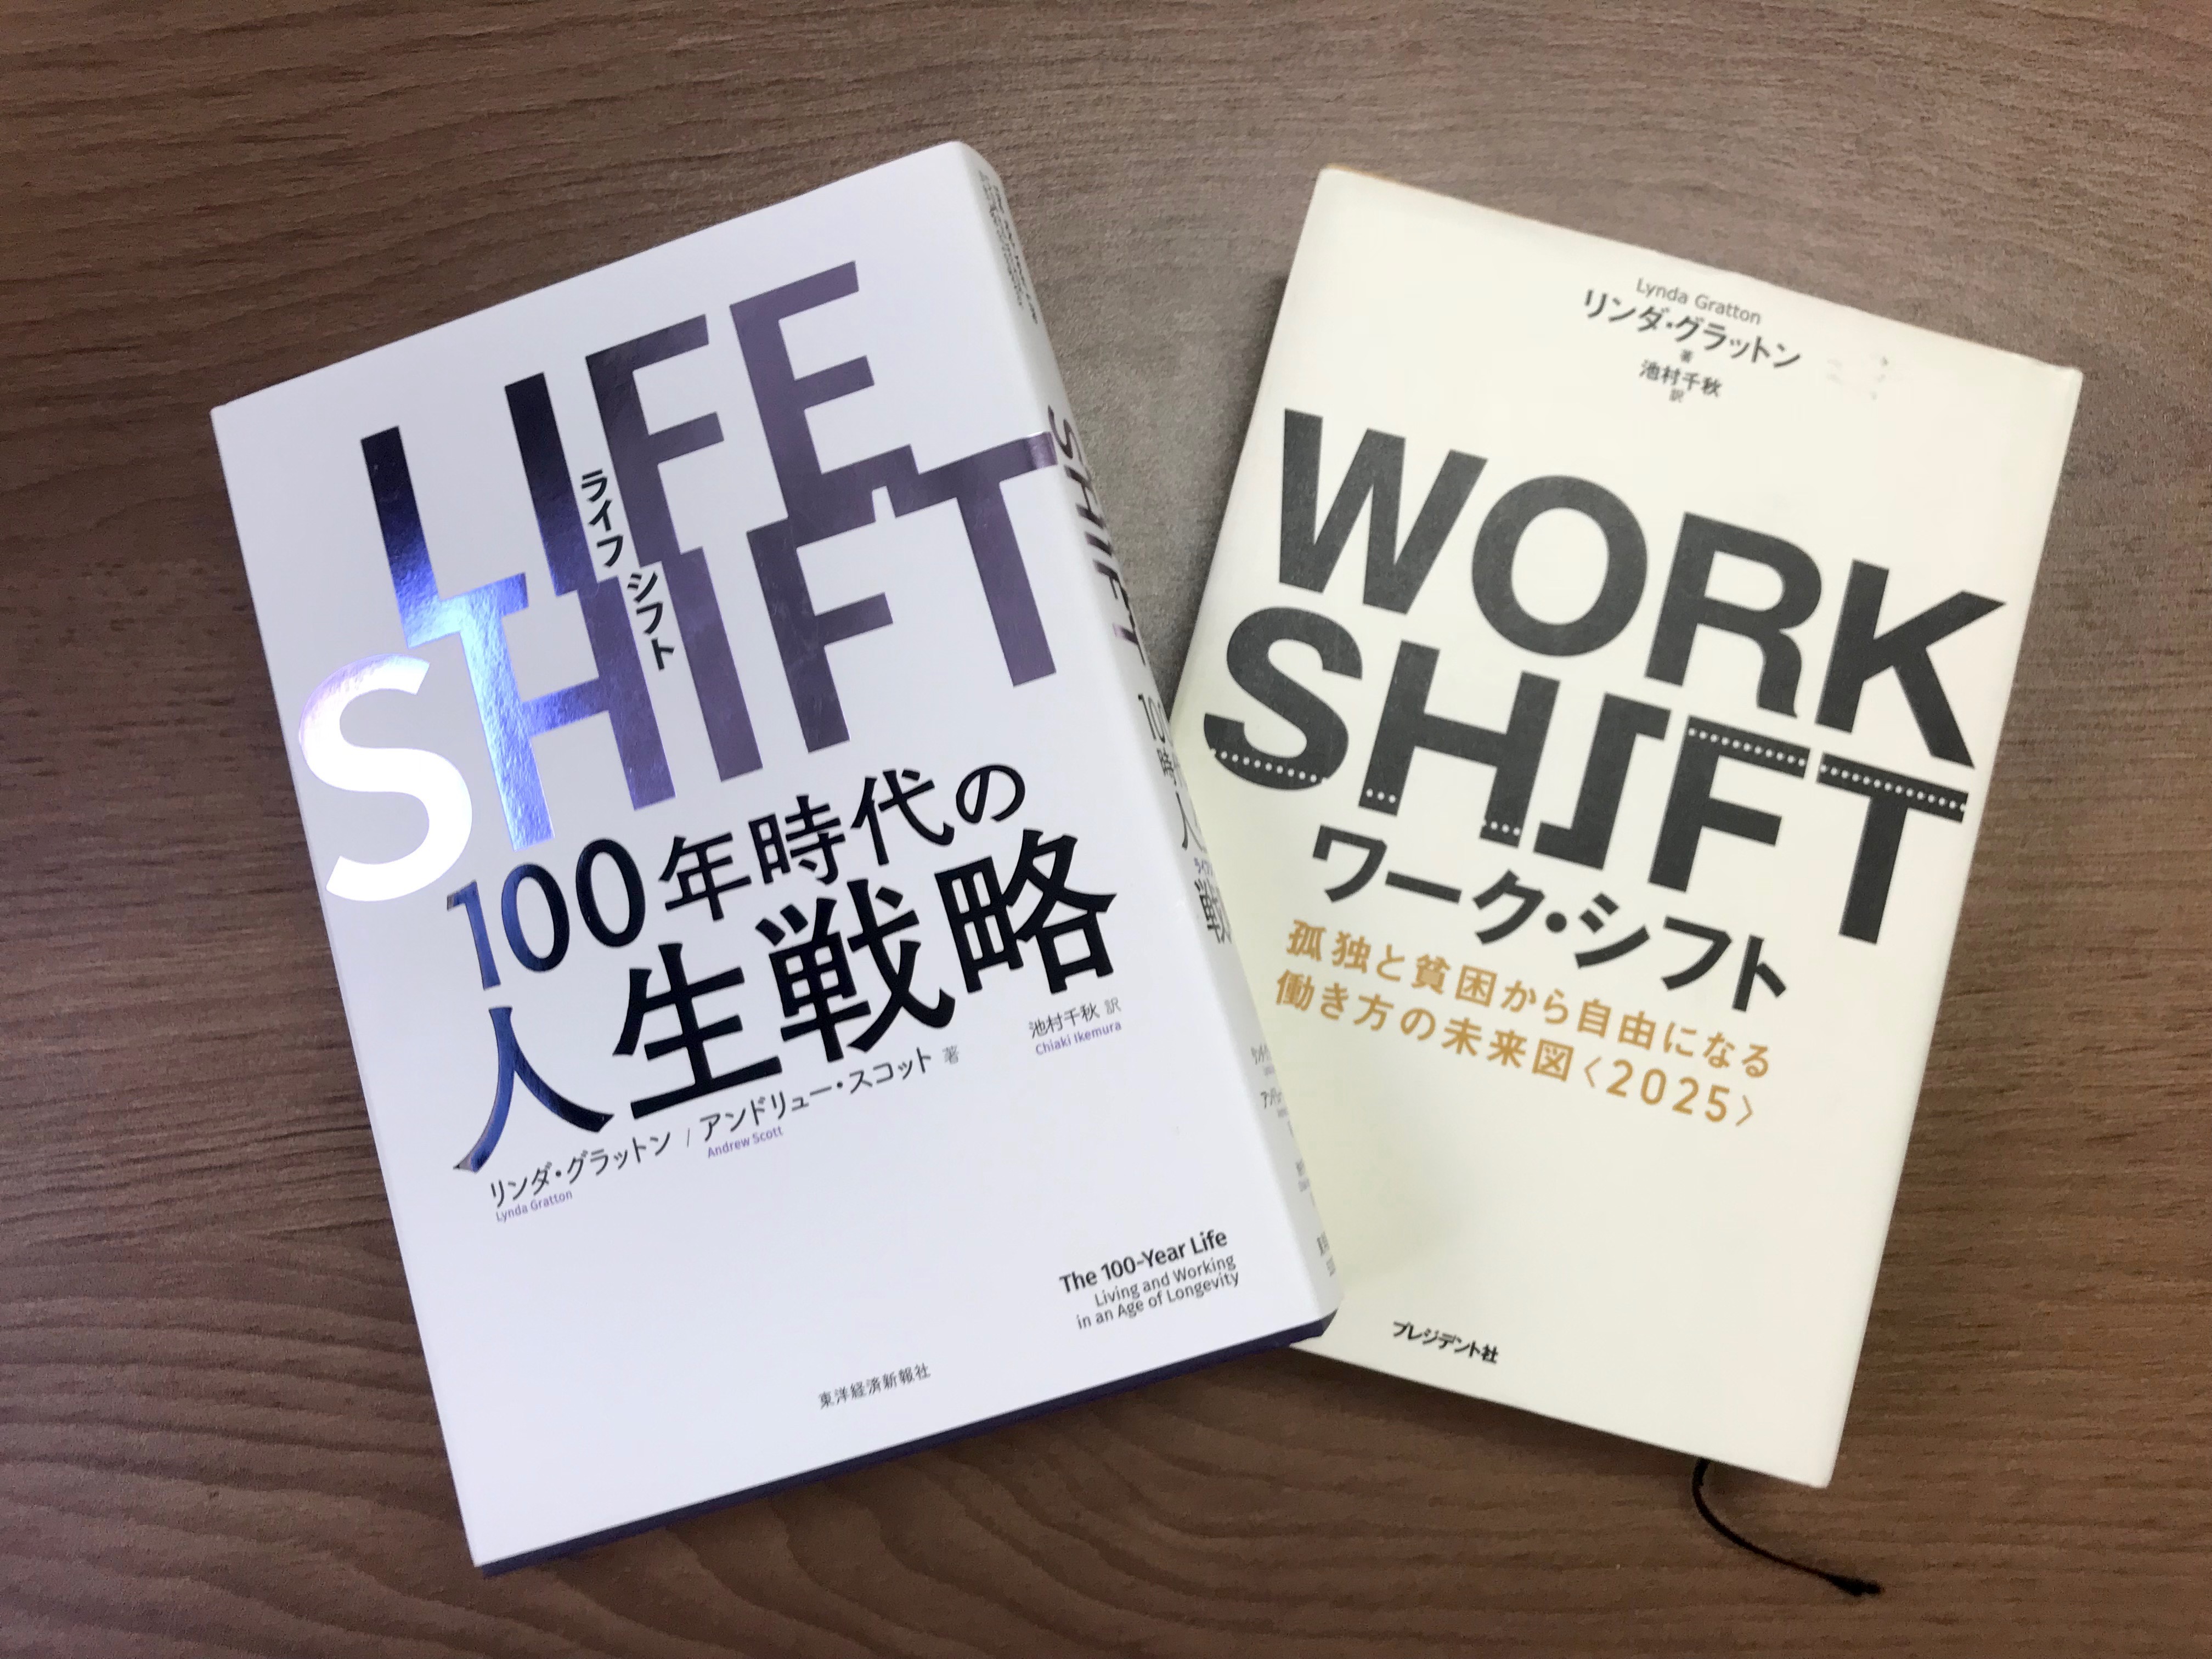 『LIFE SHIFT(ライフ・シフト)』『WORK SHIFT(ワーク・シフト)』